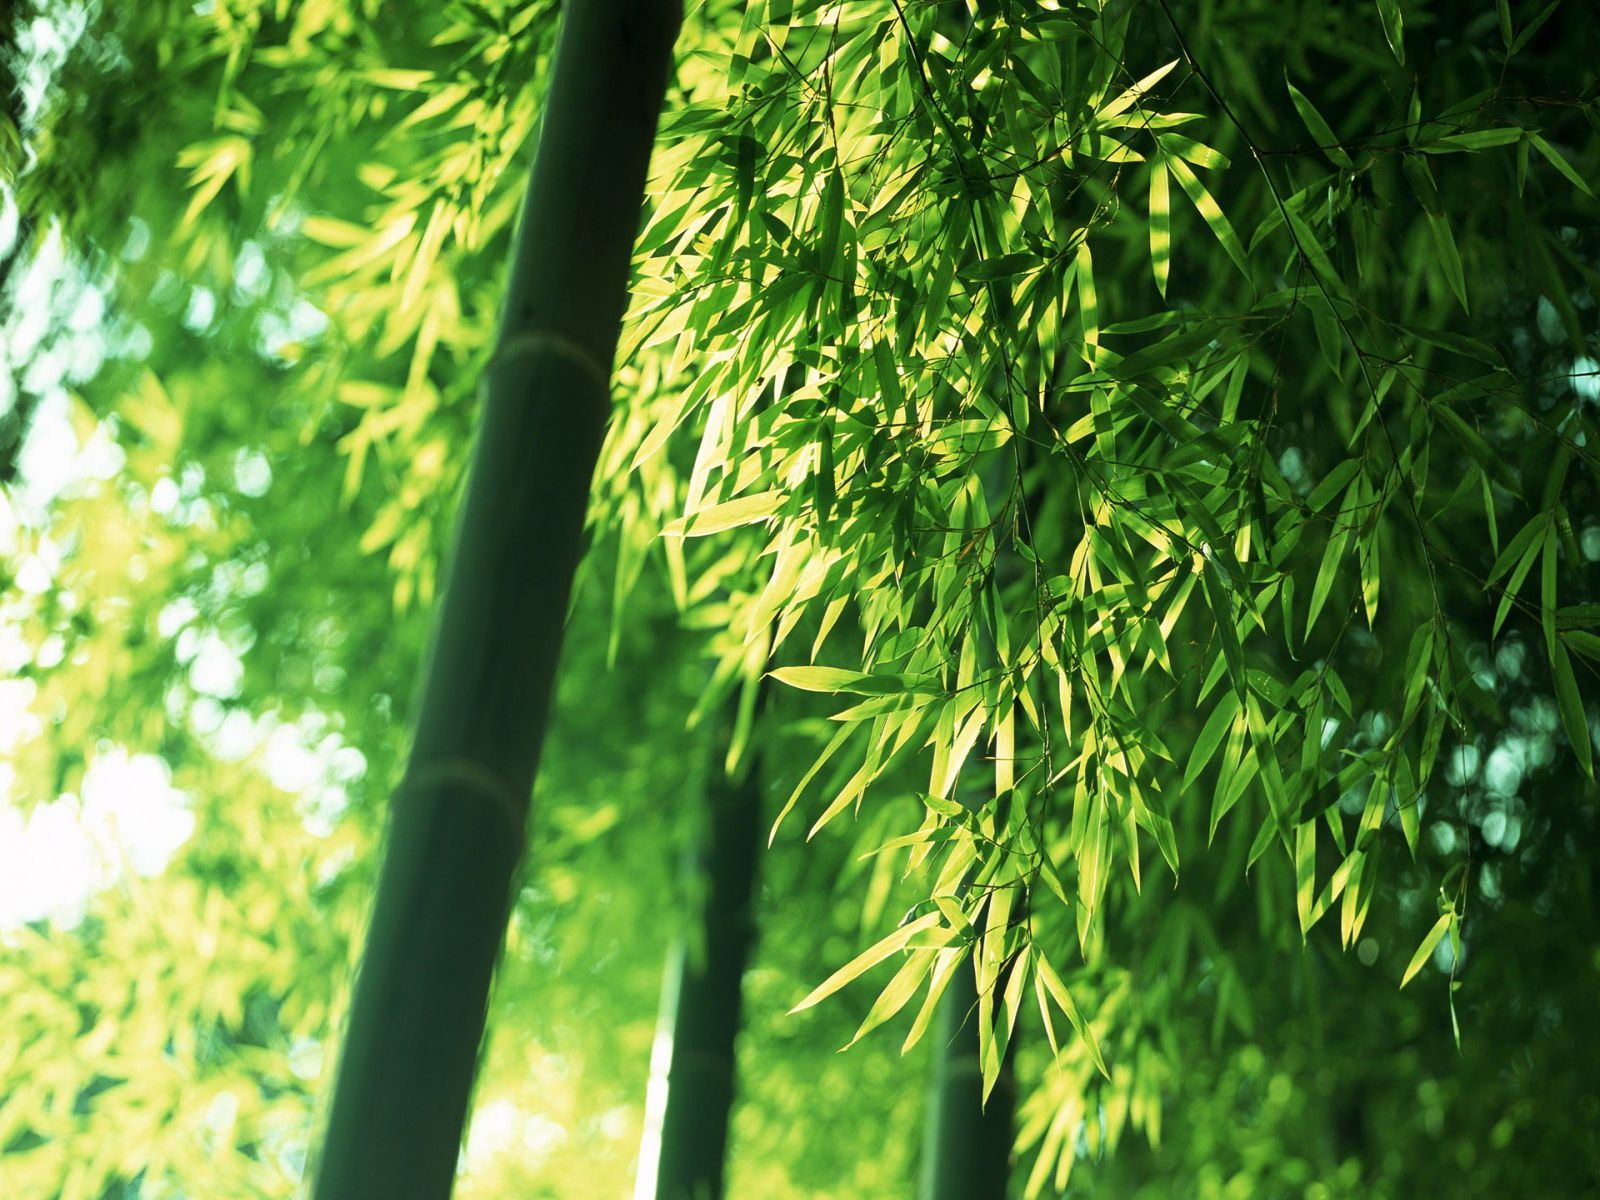 Bamboo Forest Wallpaper